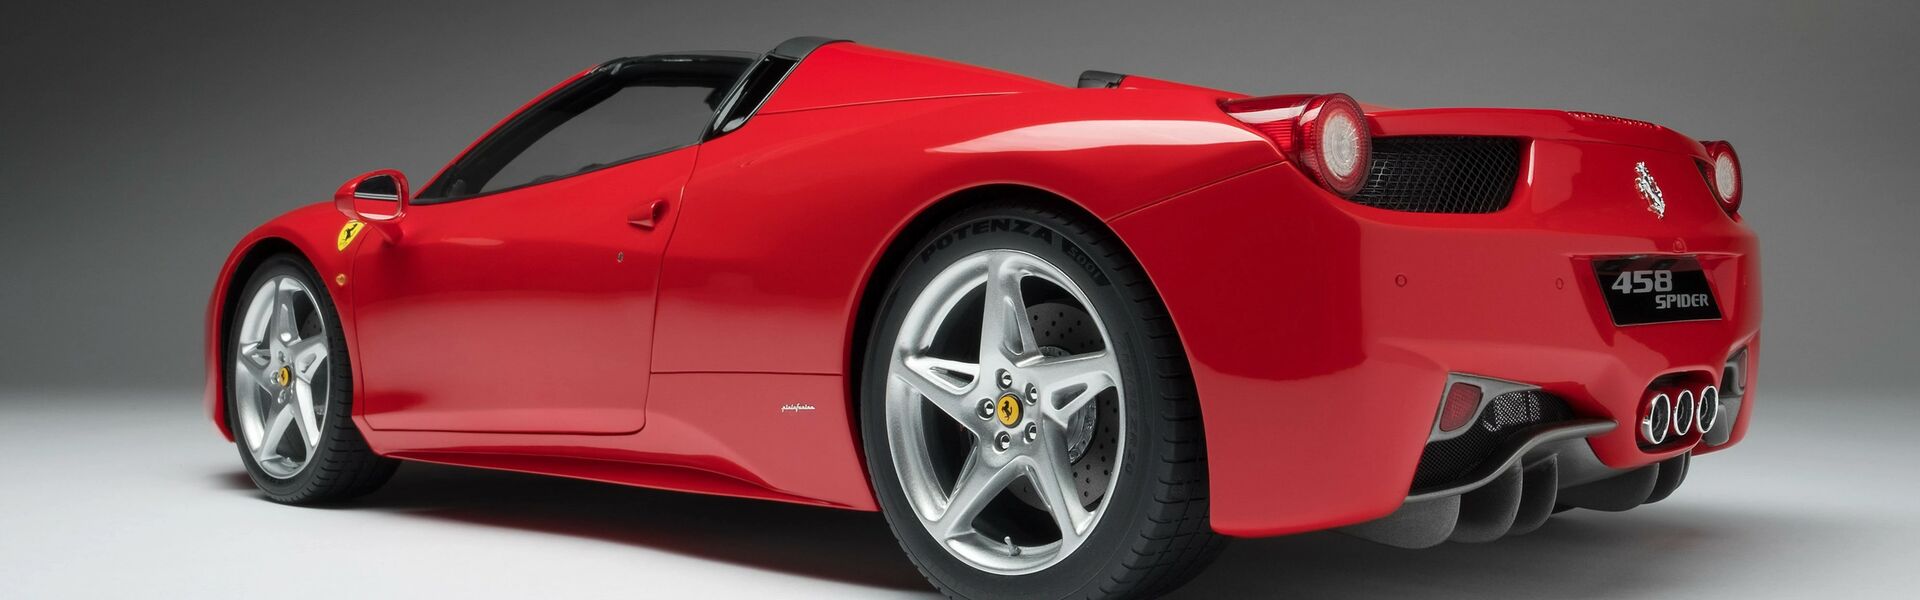 Performance díly pro automobil Ferrari 458 Italia/458 Spider